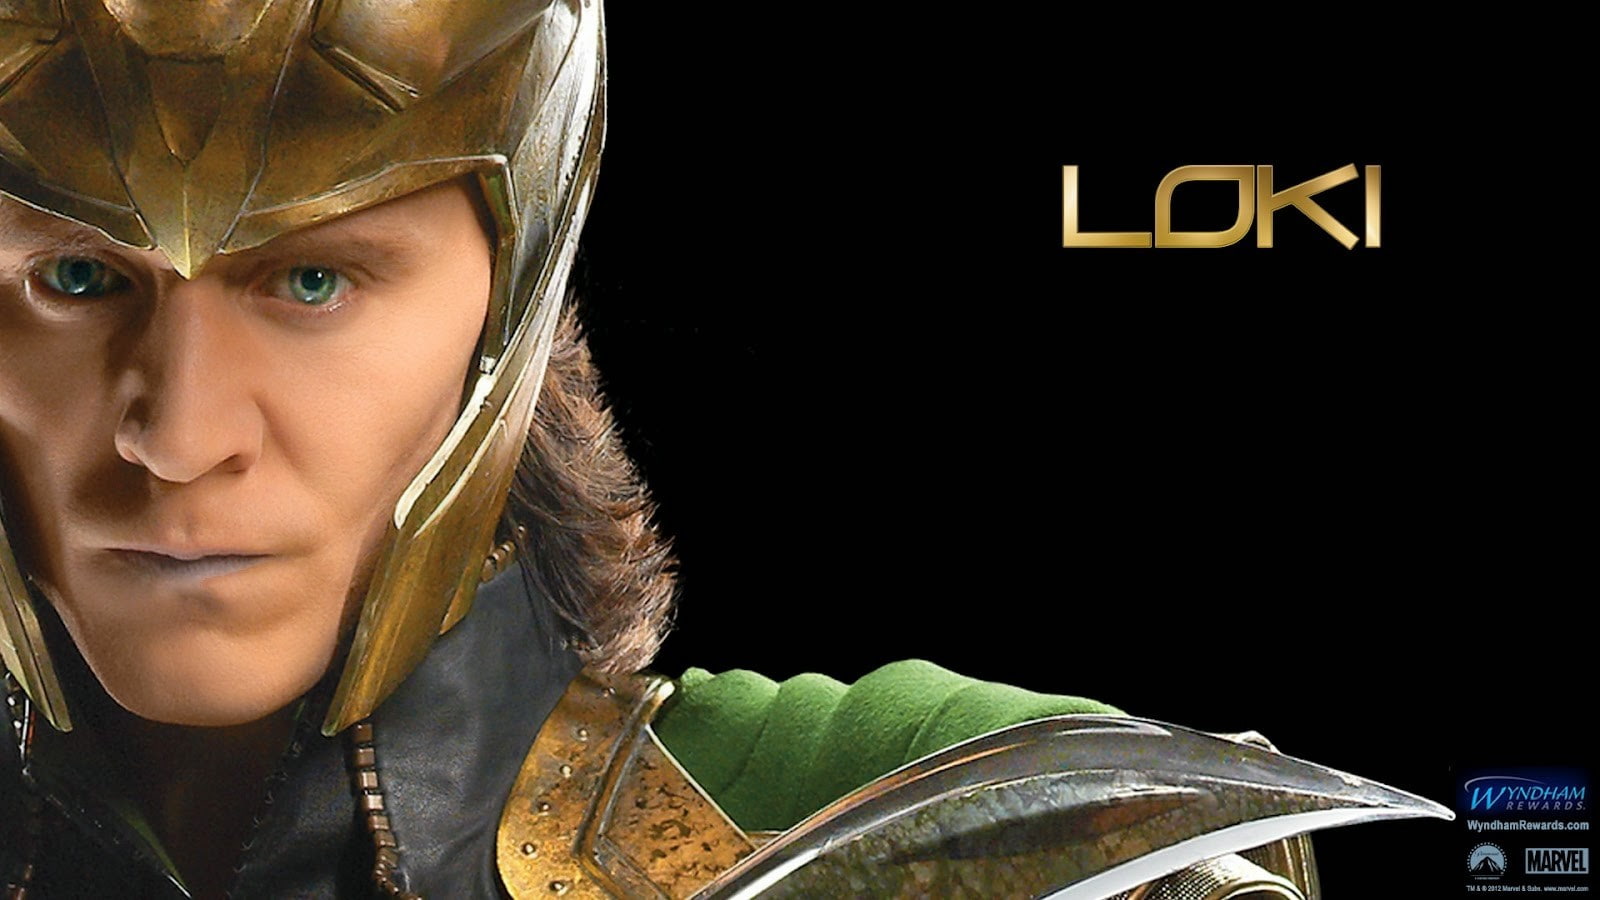 Loki, The Avengers, Tom Hiddleston